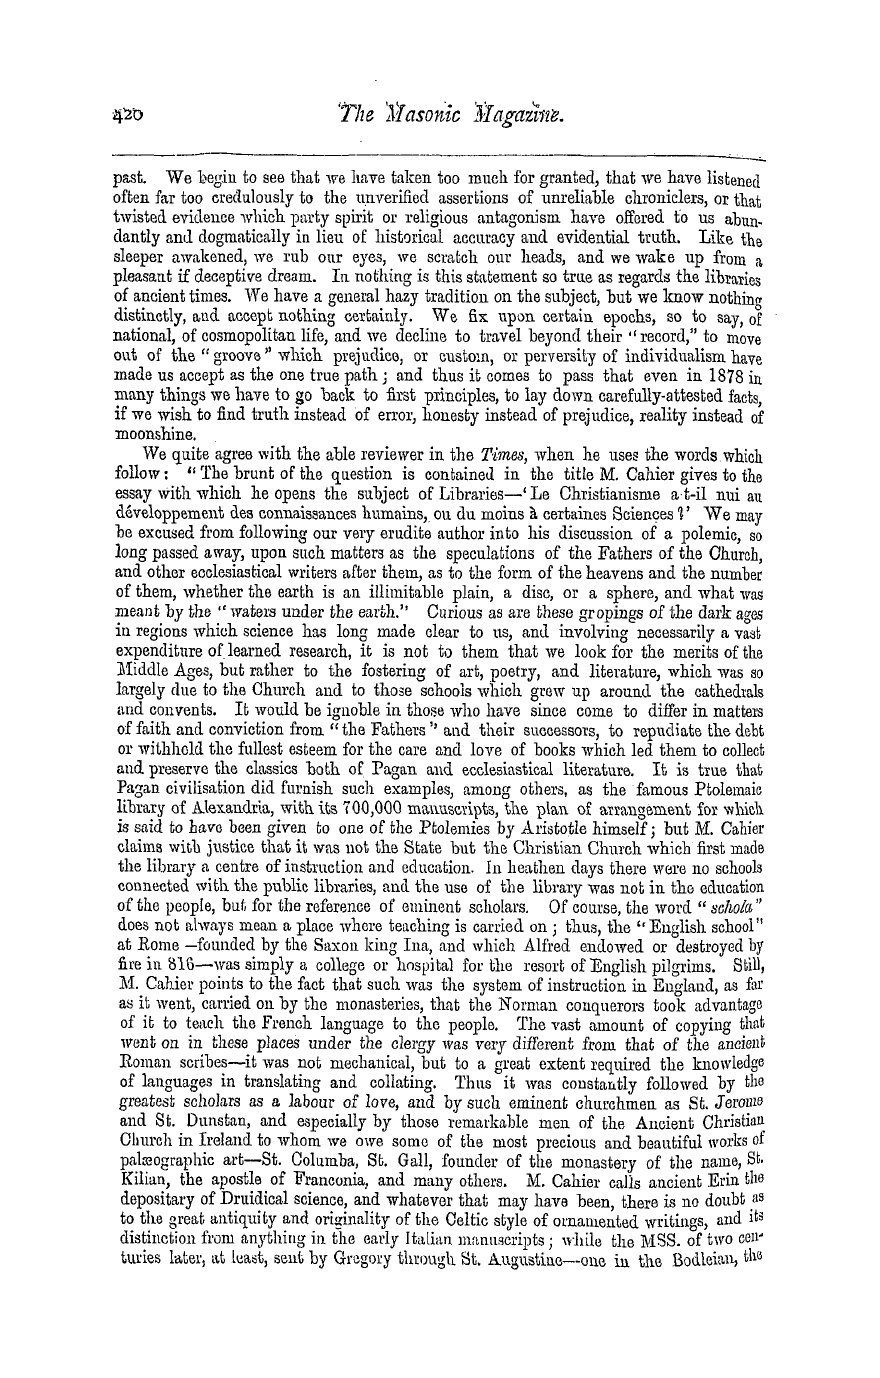 The Masonic Magazine: 1878-02-01 - Ancient Libraries.